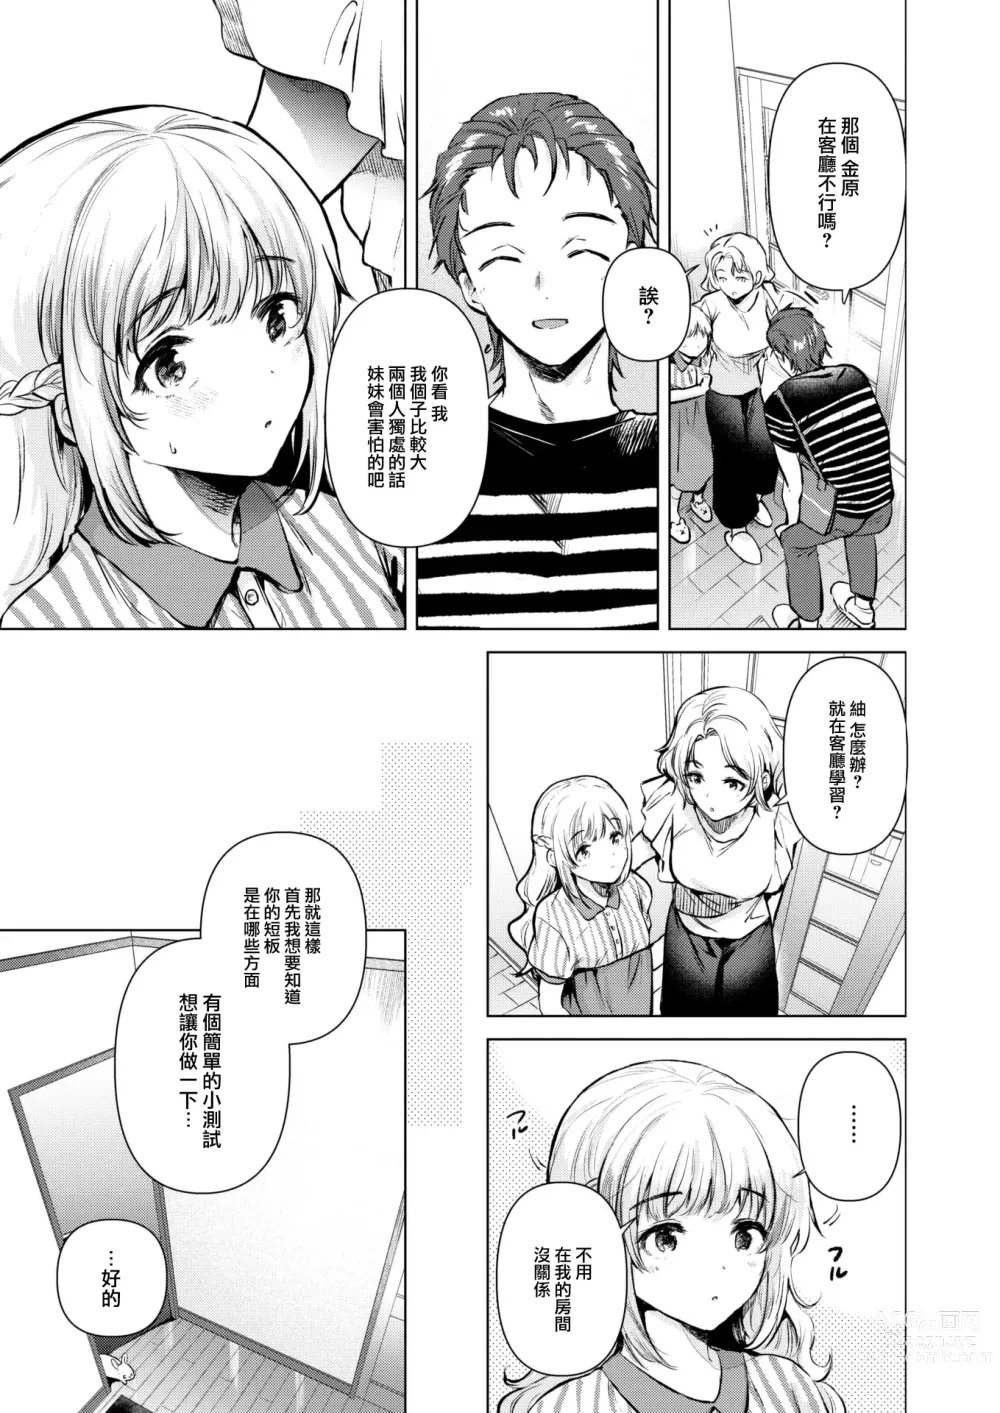 Page 4 of manga Tomodachi no Imouto